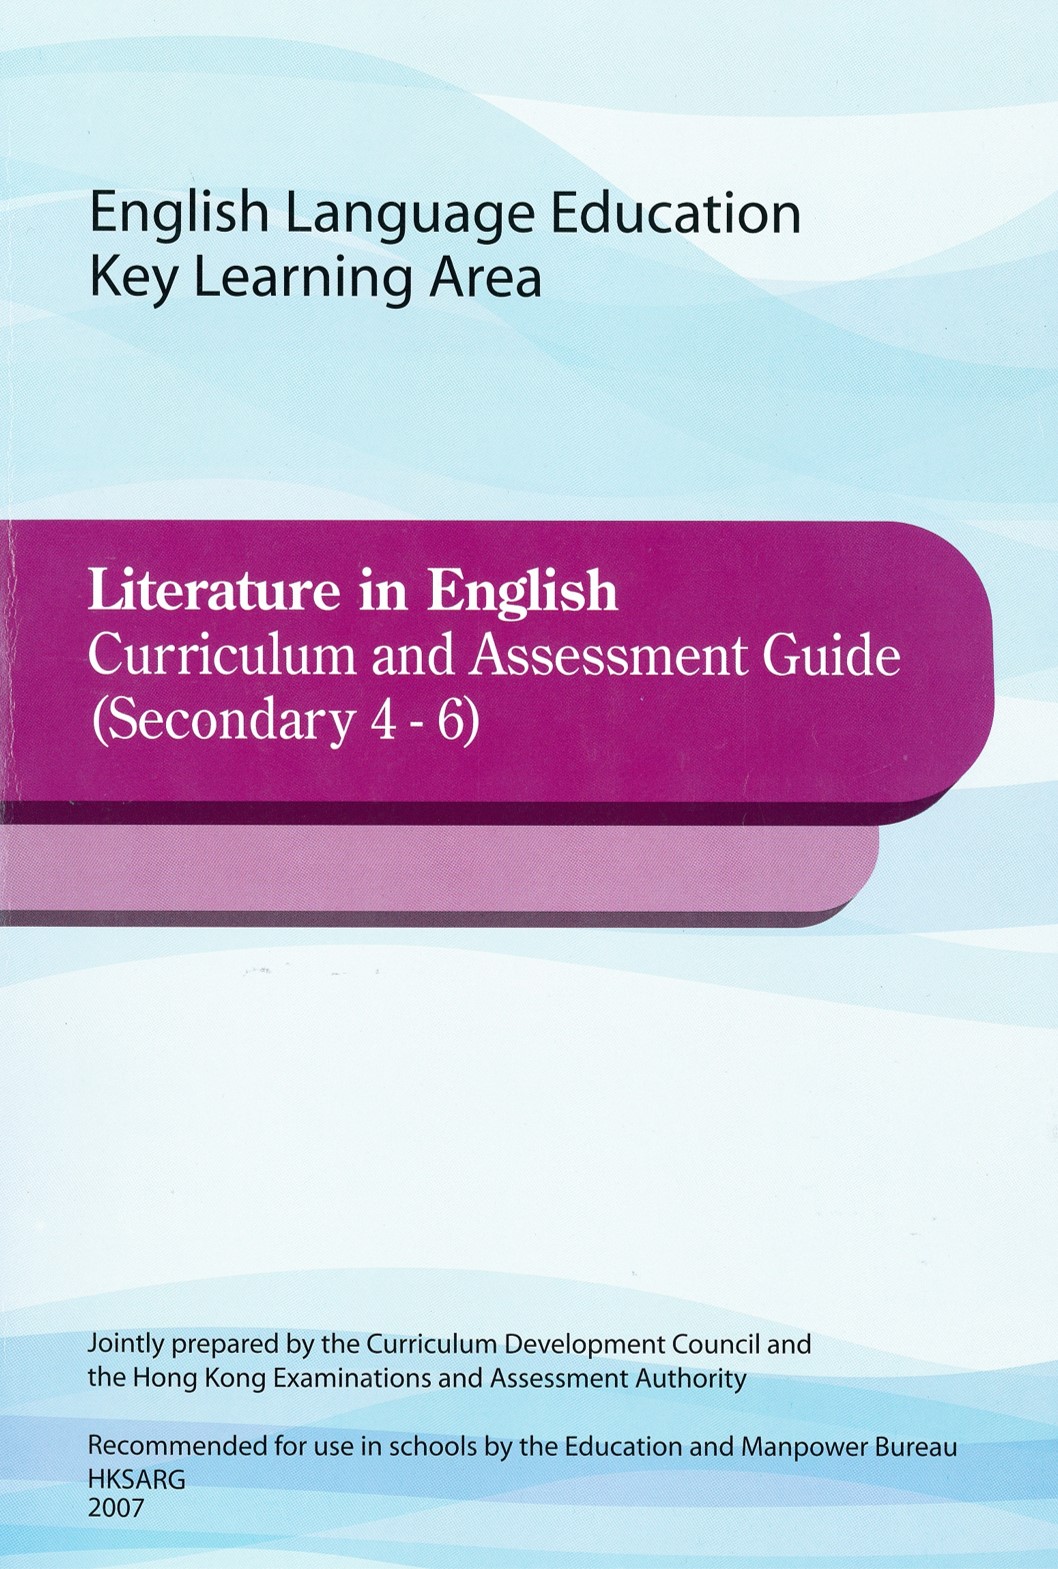 Literature in English C&A Guide